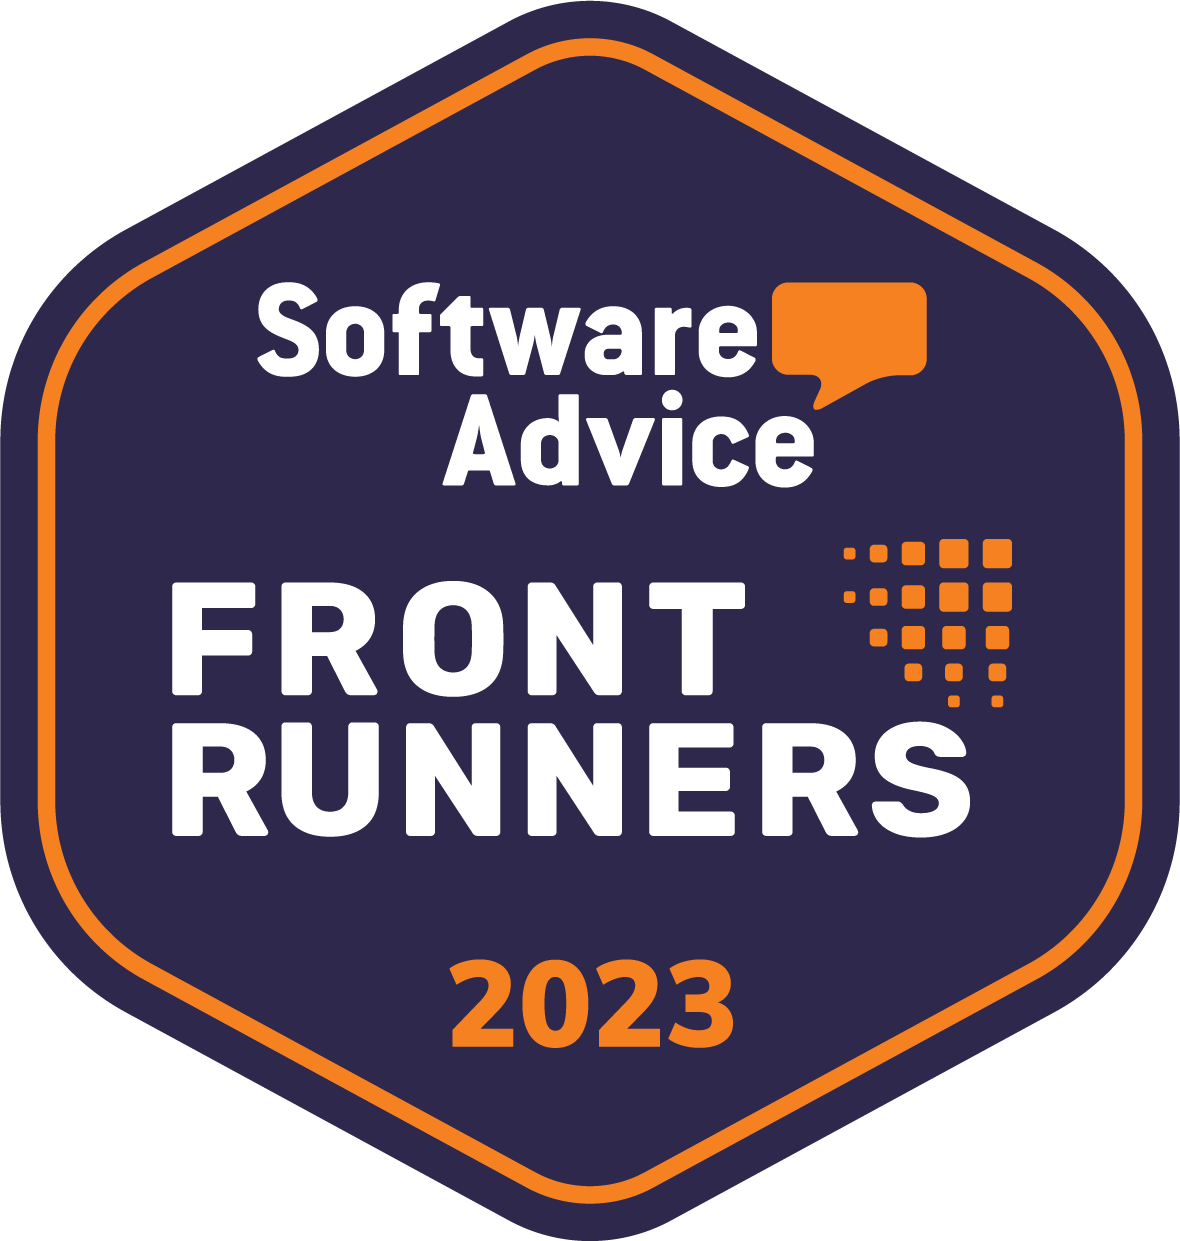 Software advice frontrunners list (k-12) Image